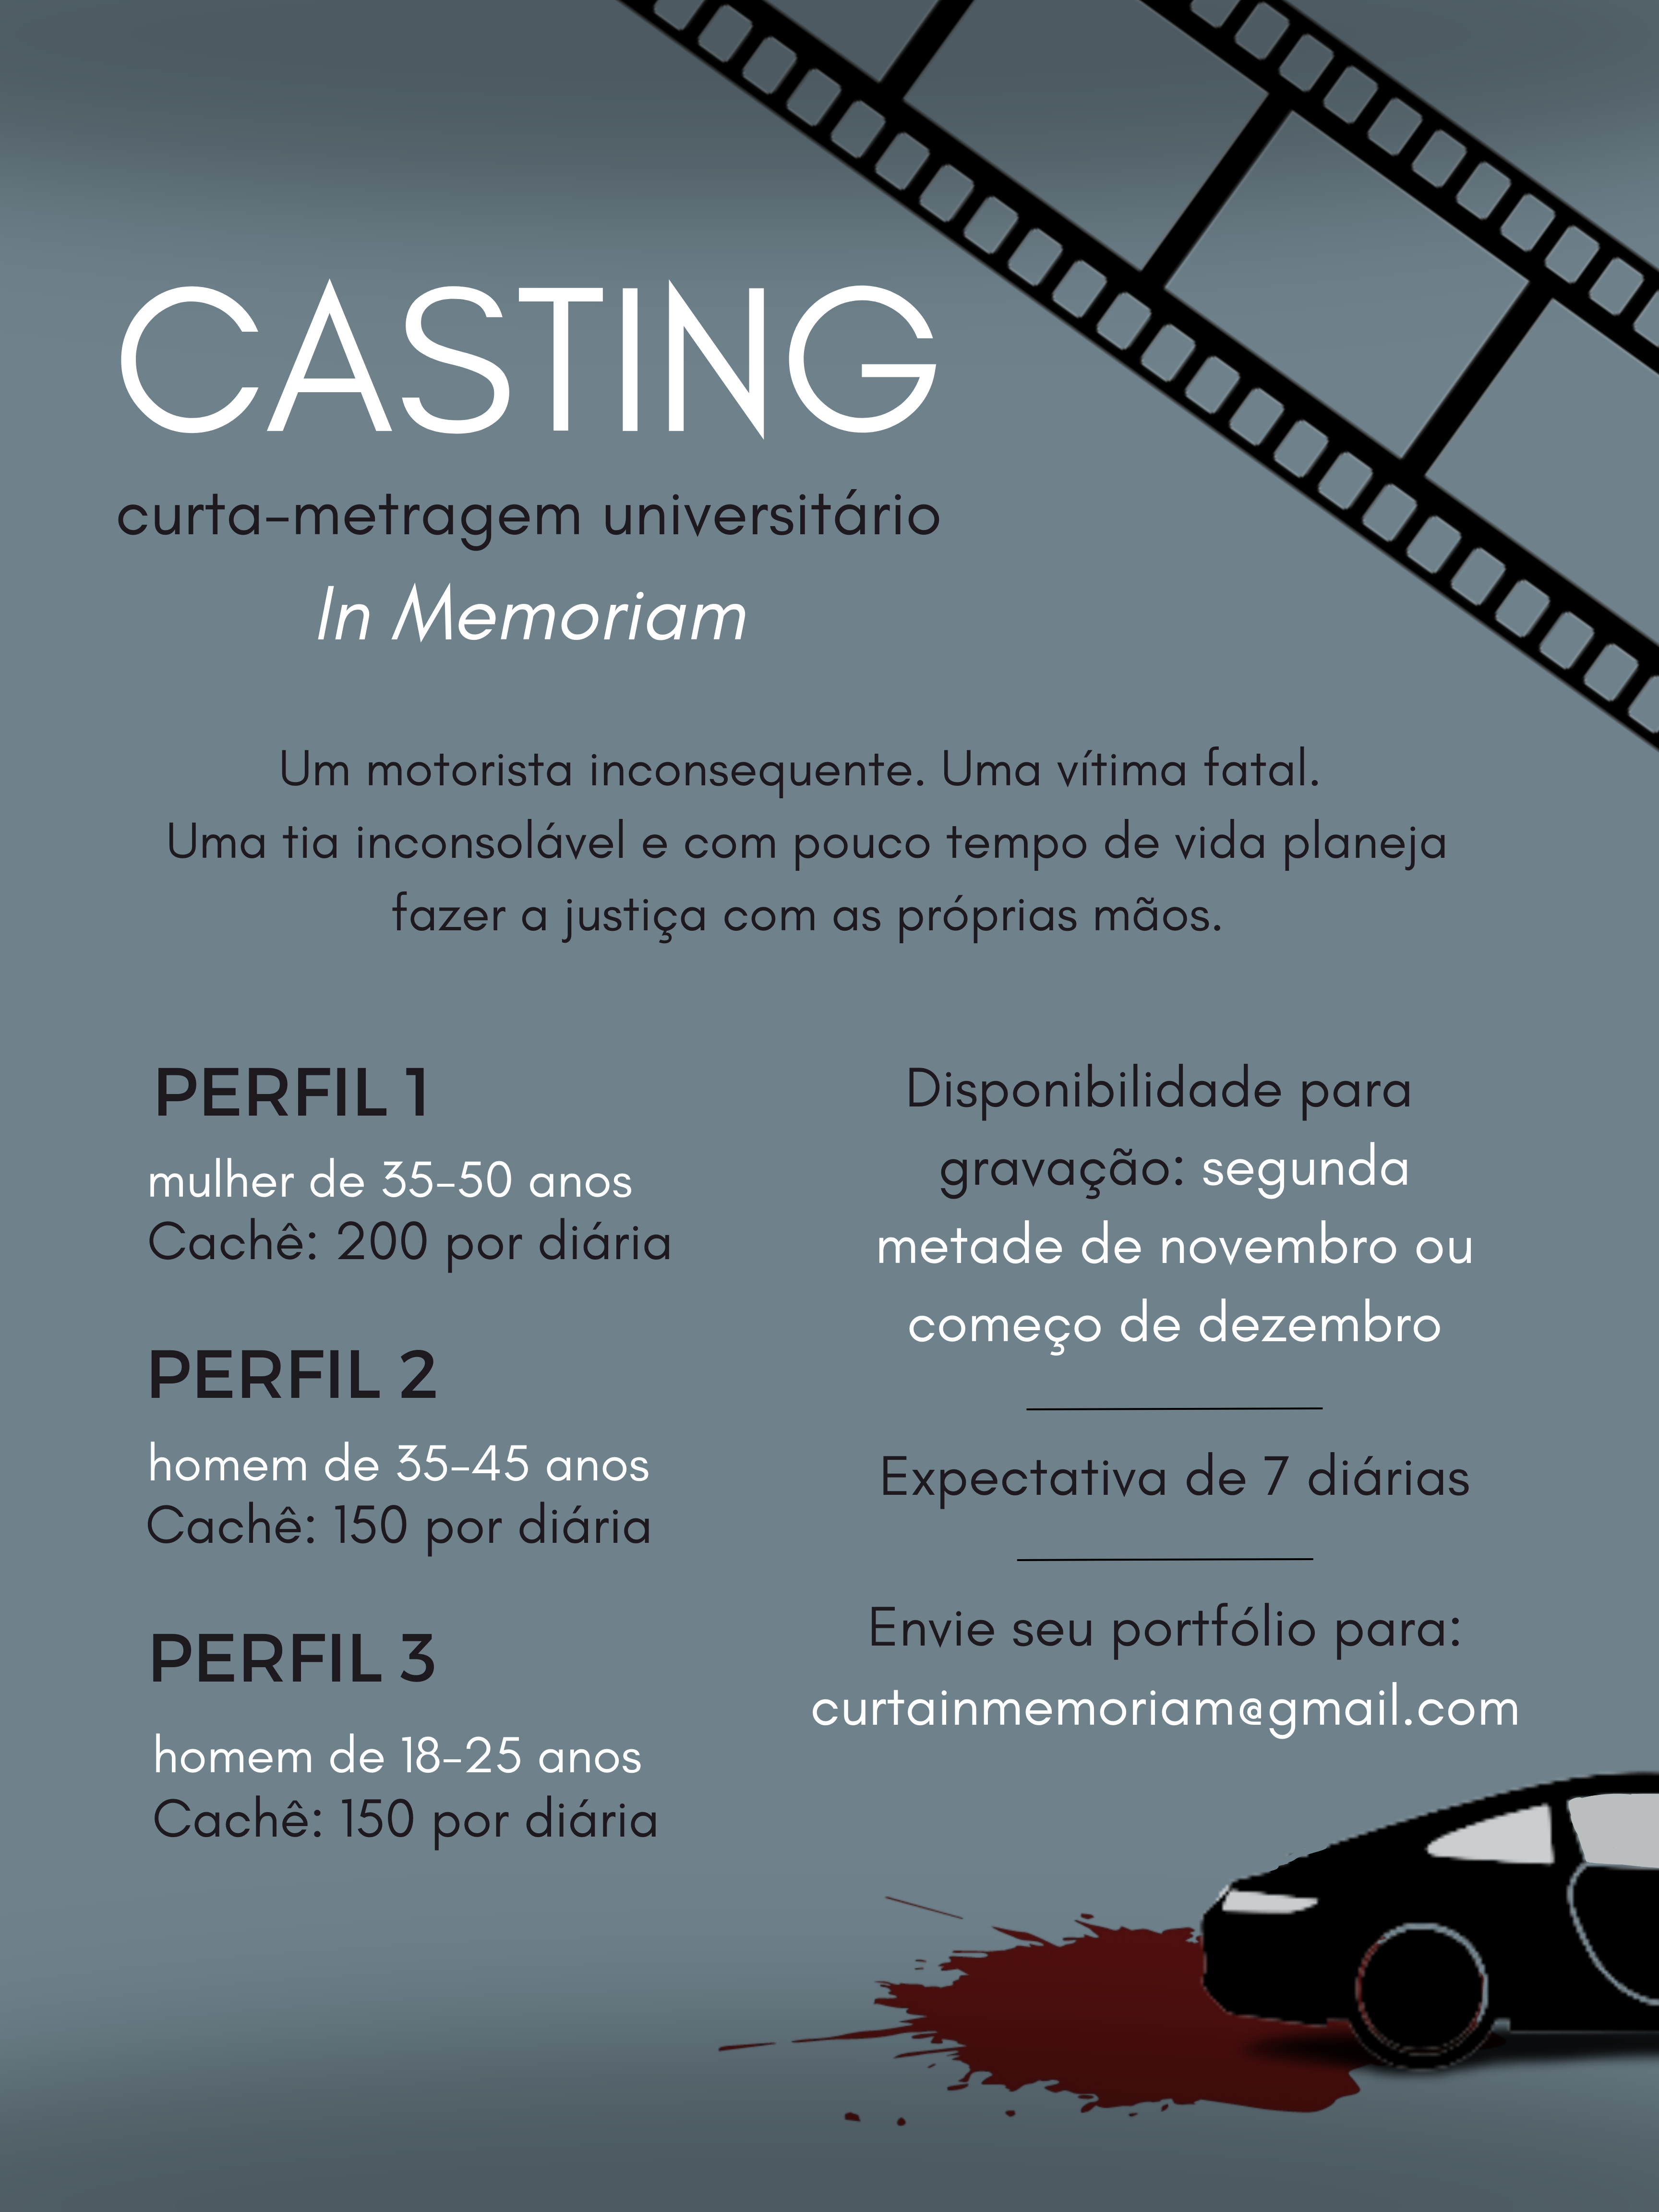 Curta “In Memorian” procura atores e atrizes – Programa Oportunidades